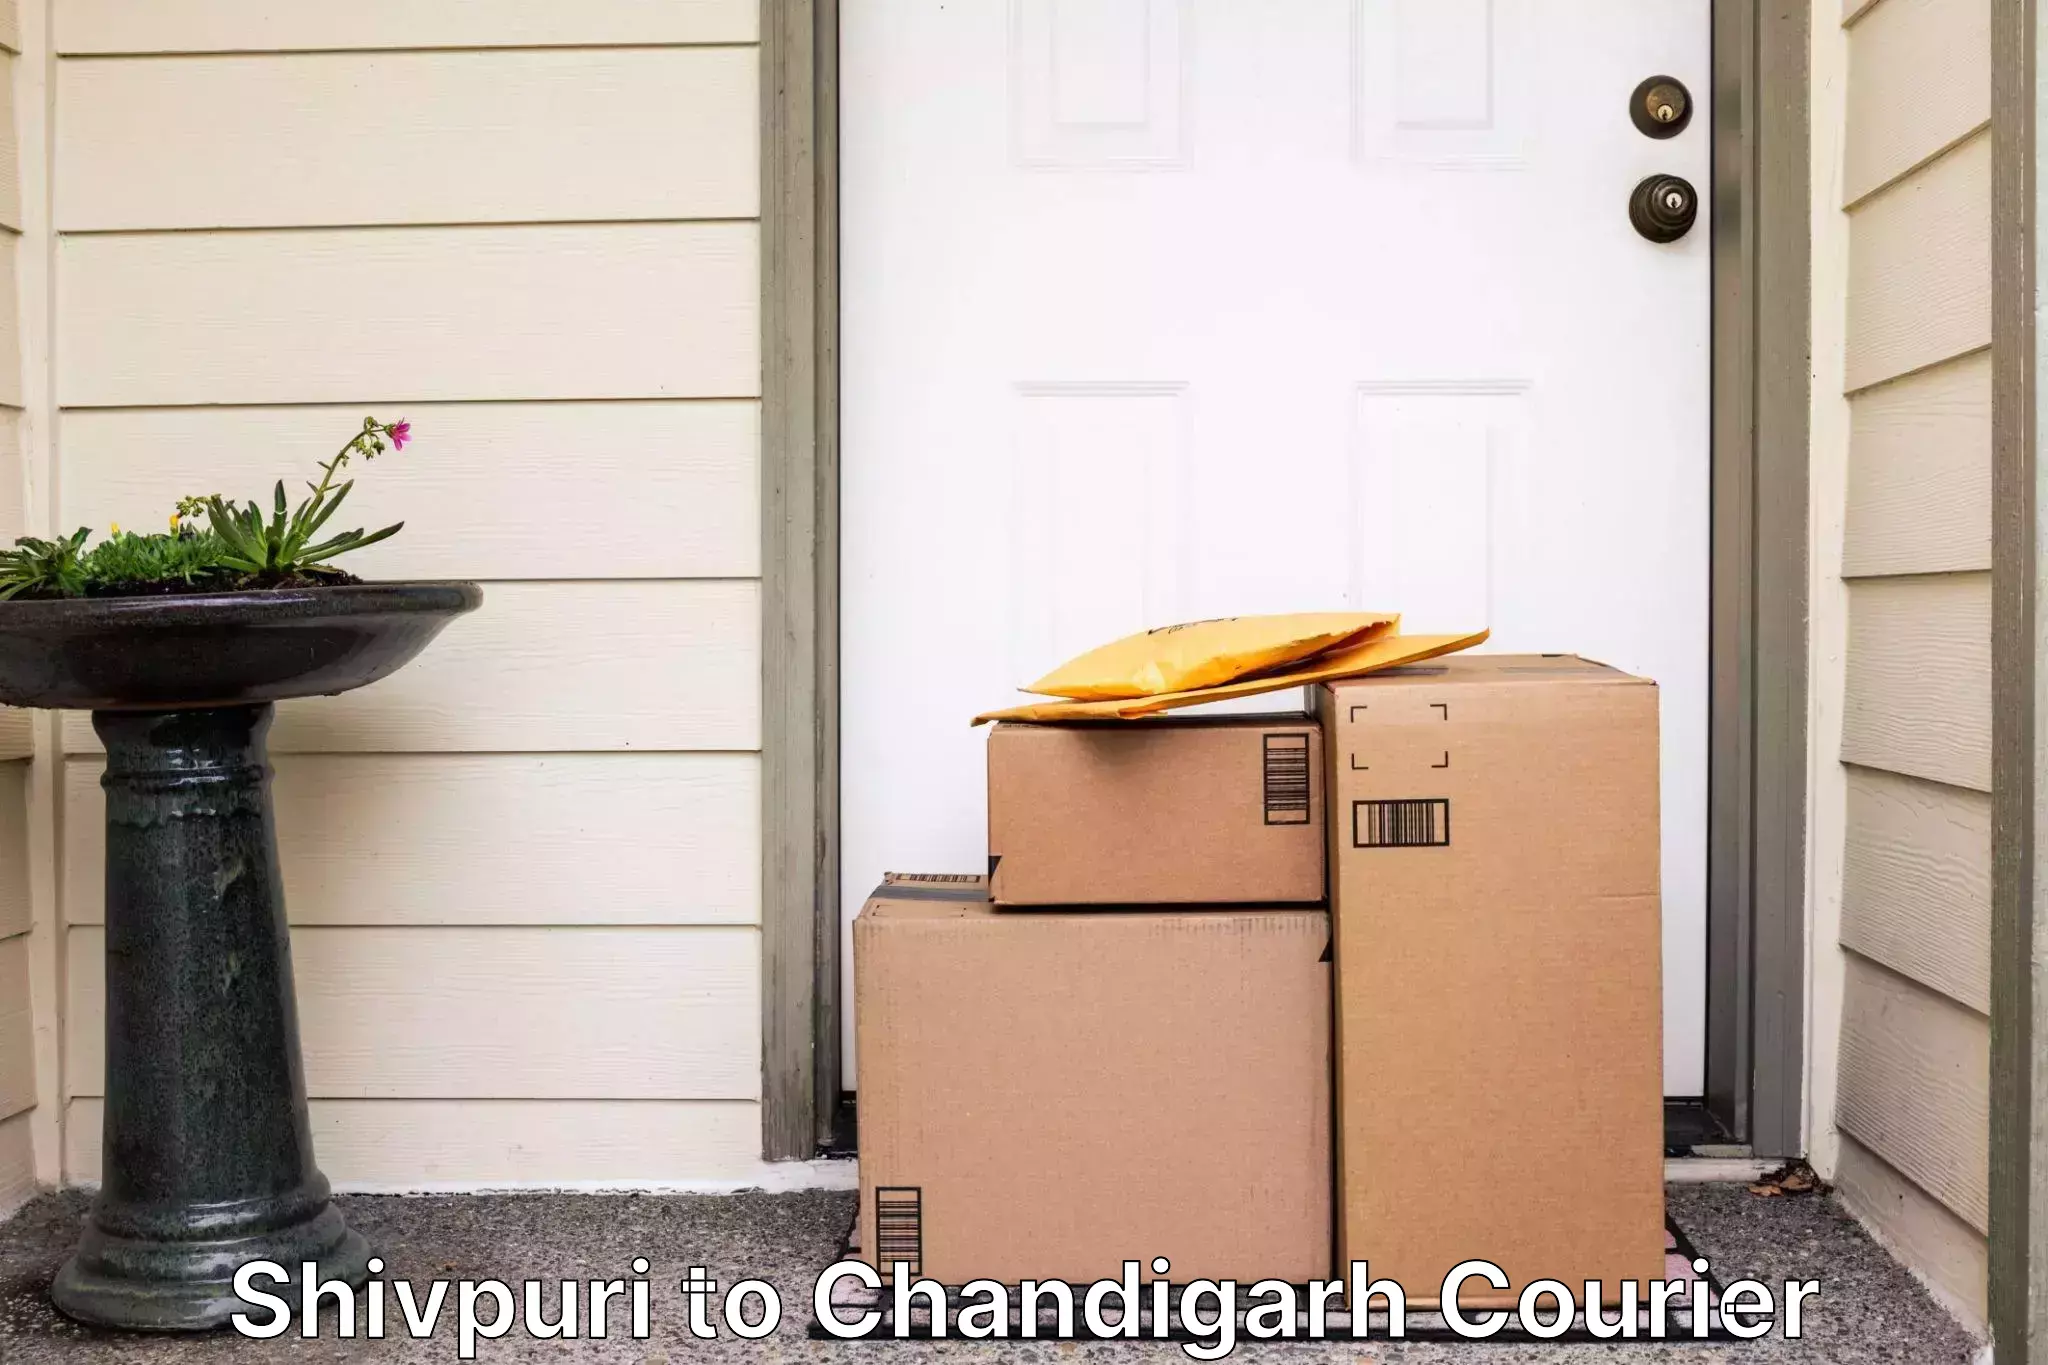 Luggage shipment specialists Shivpuri to Chandigarh